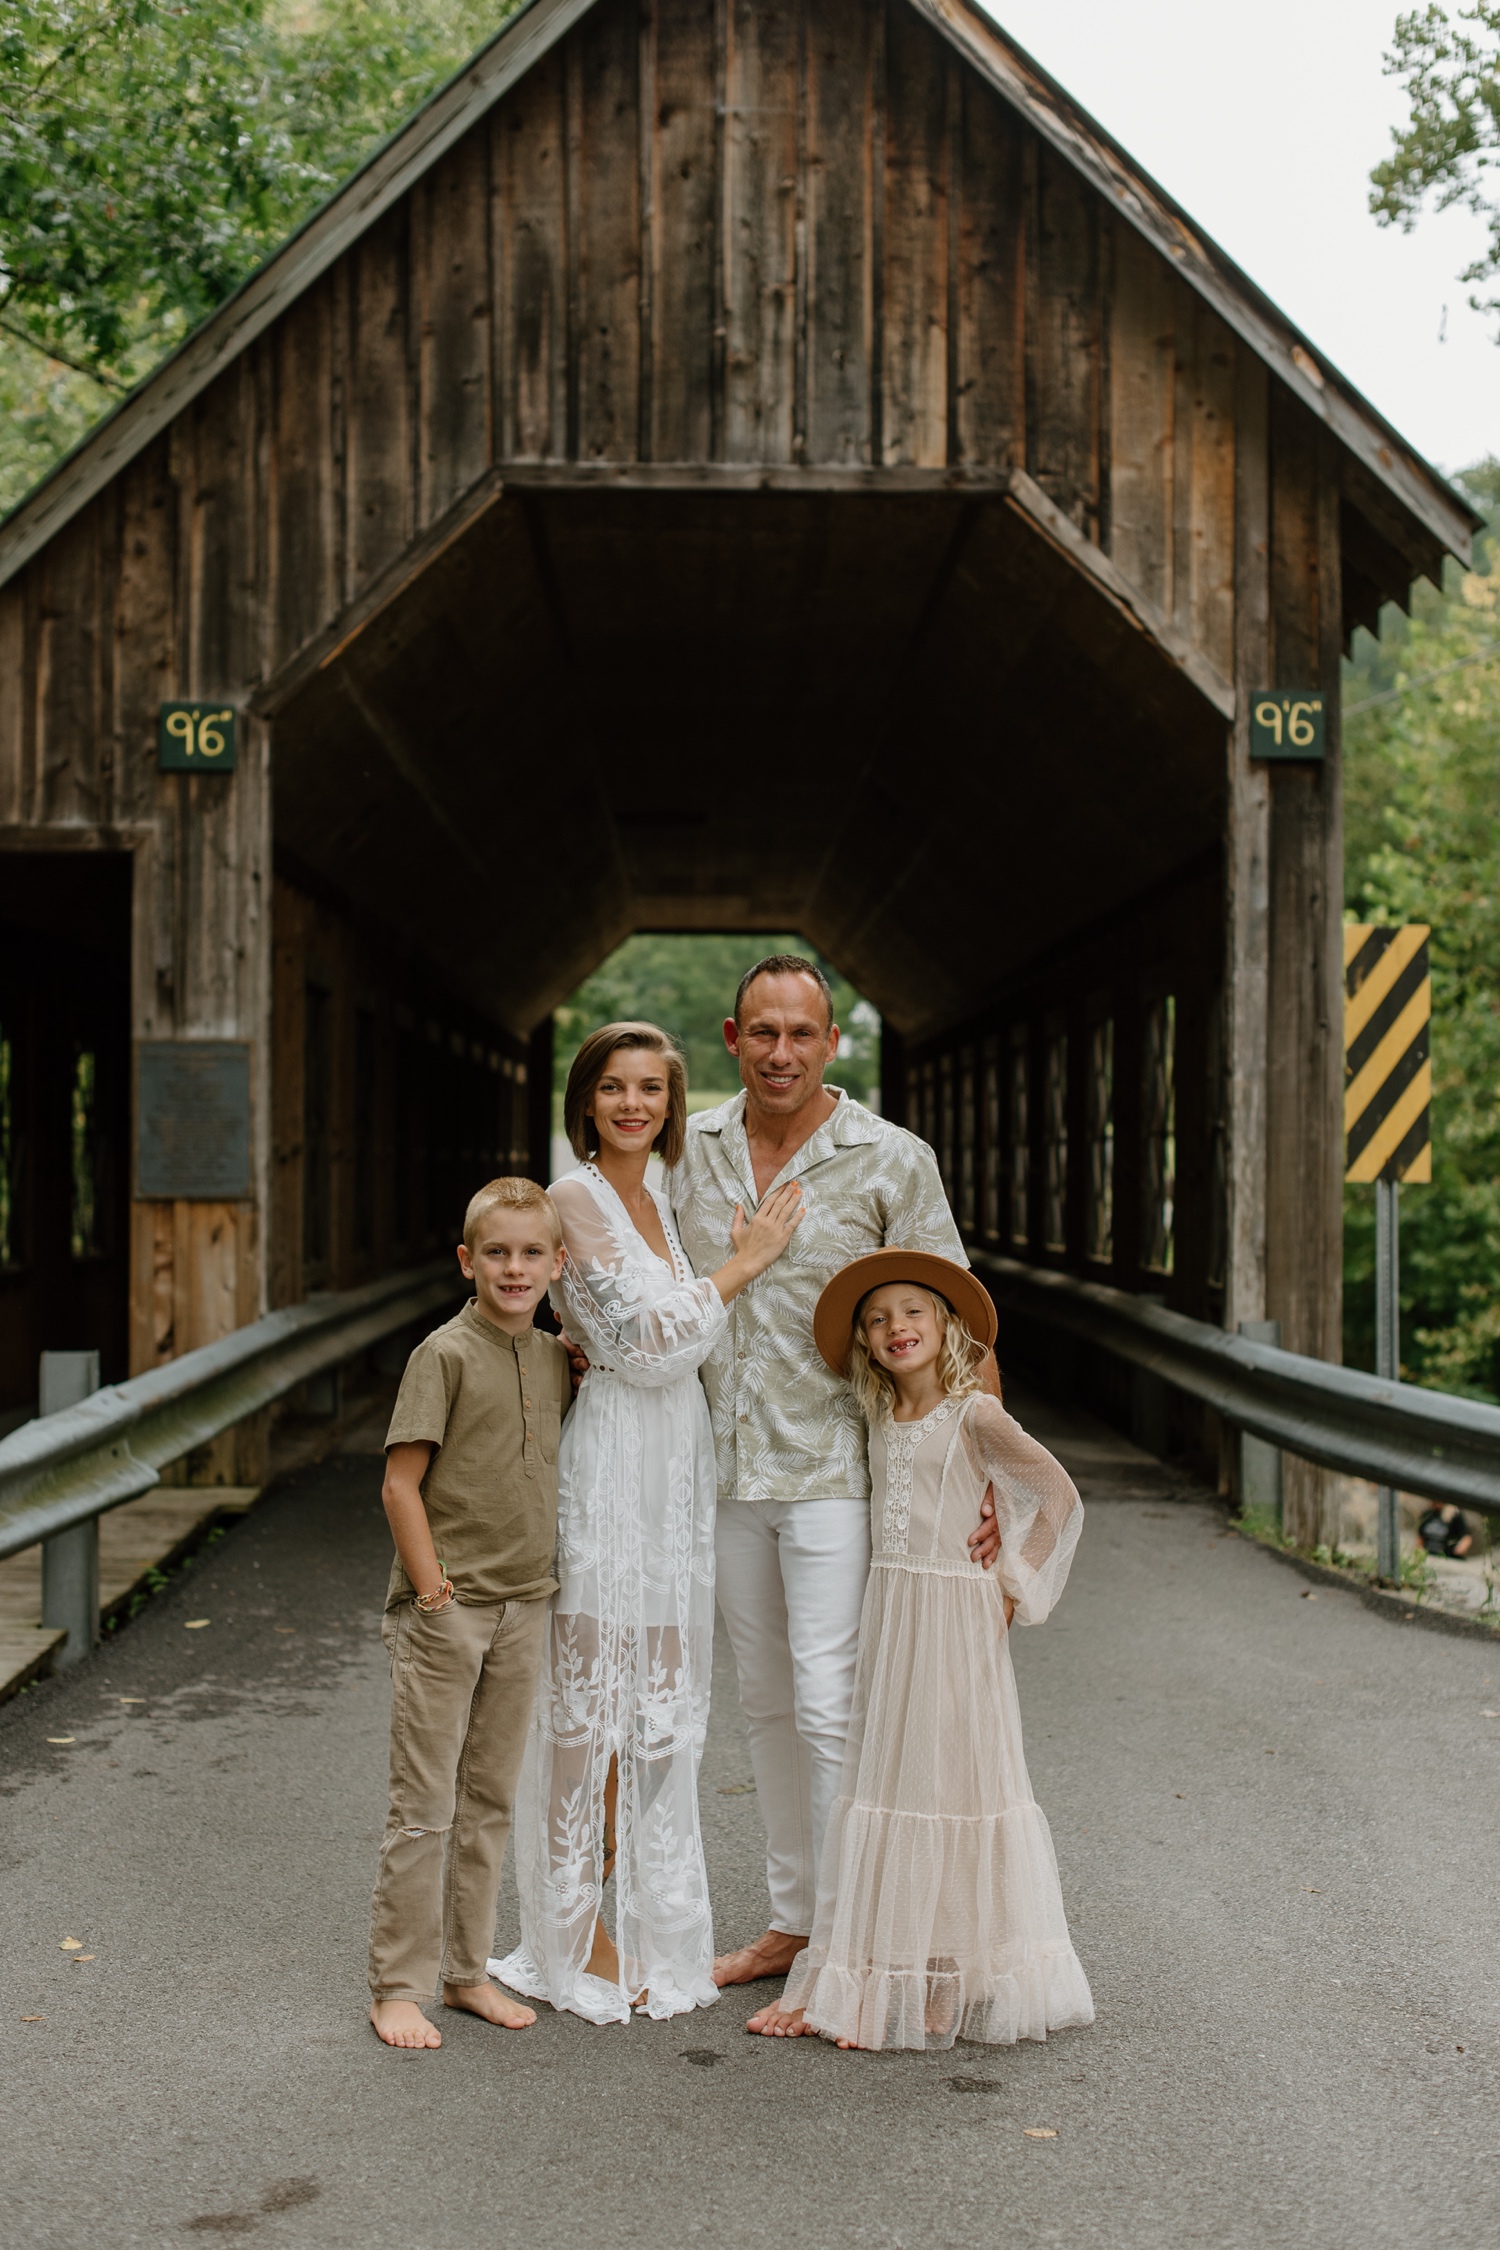 Emerts Cove Covered Bridge Family Photography Great Smoky Mountains National Park Gatlinburg Photographers